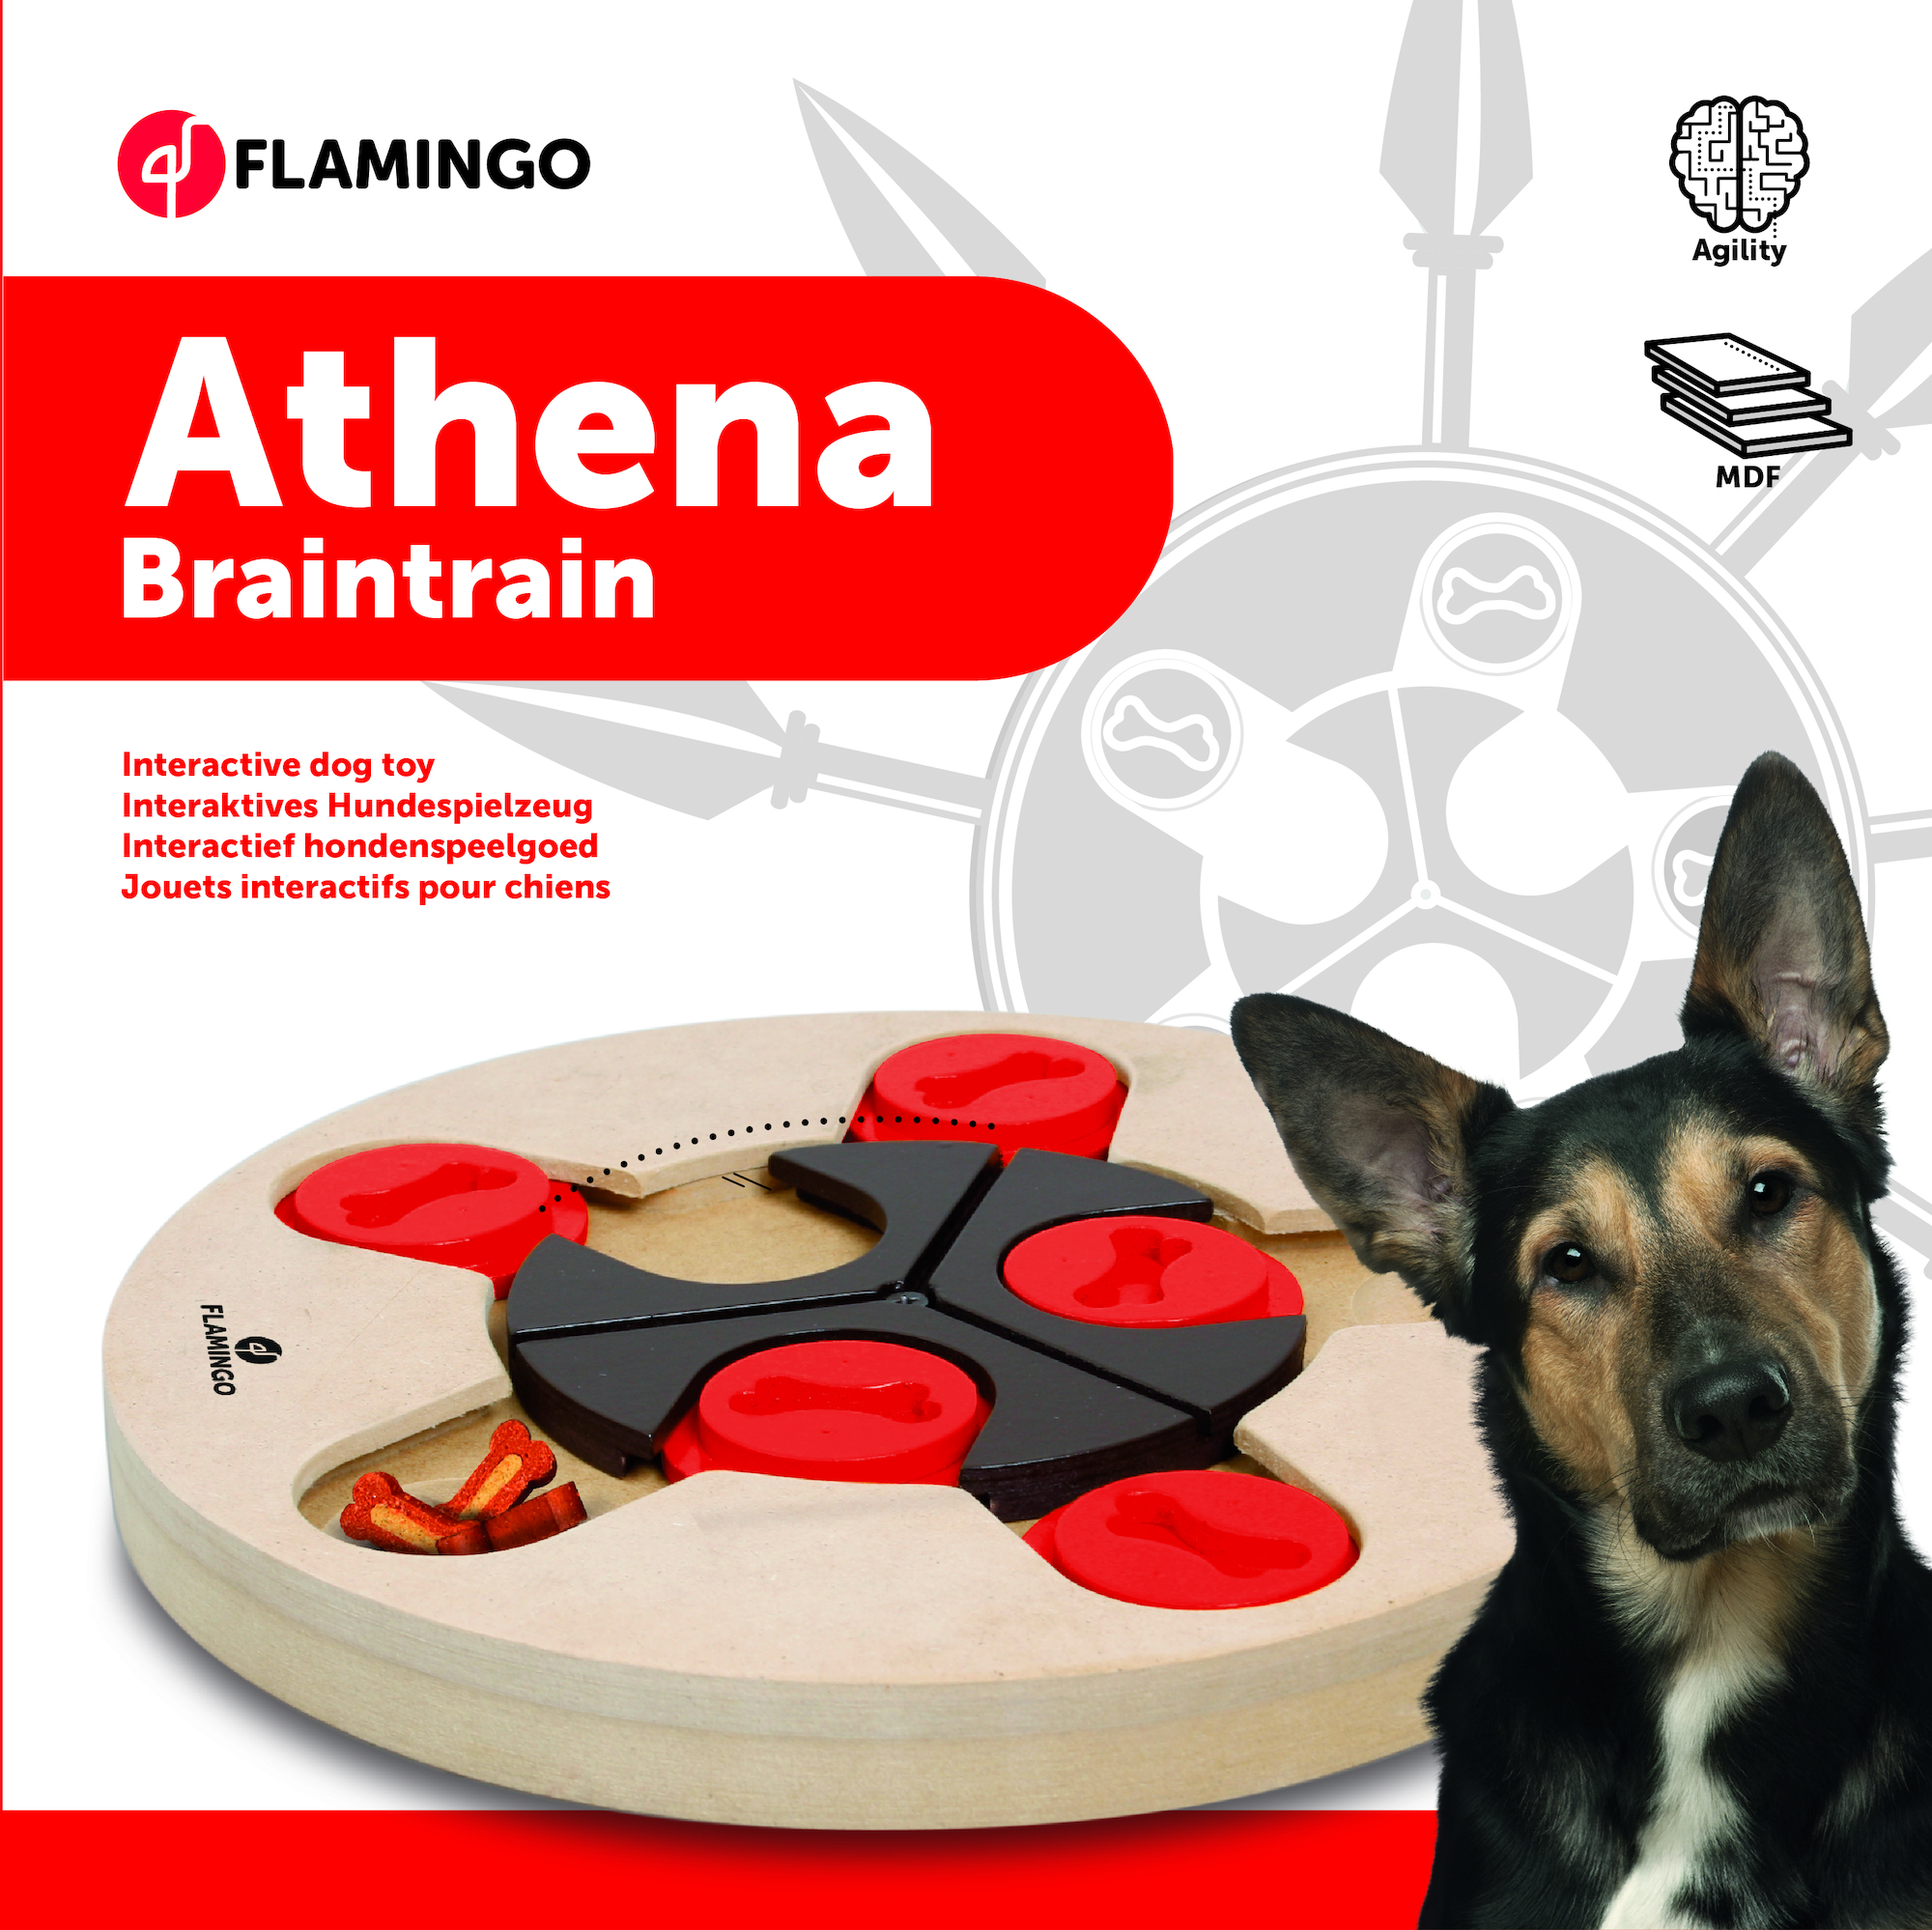 ATHENA braintrain Flamingo